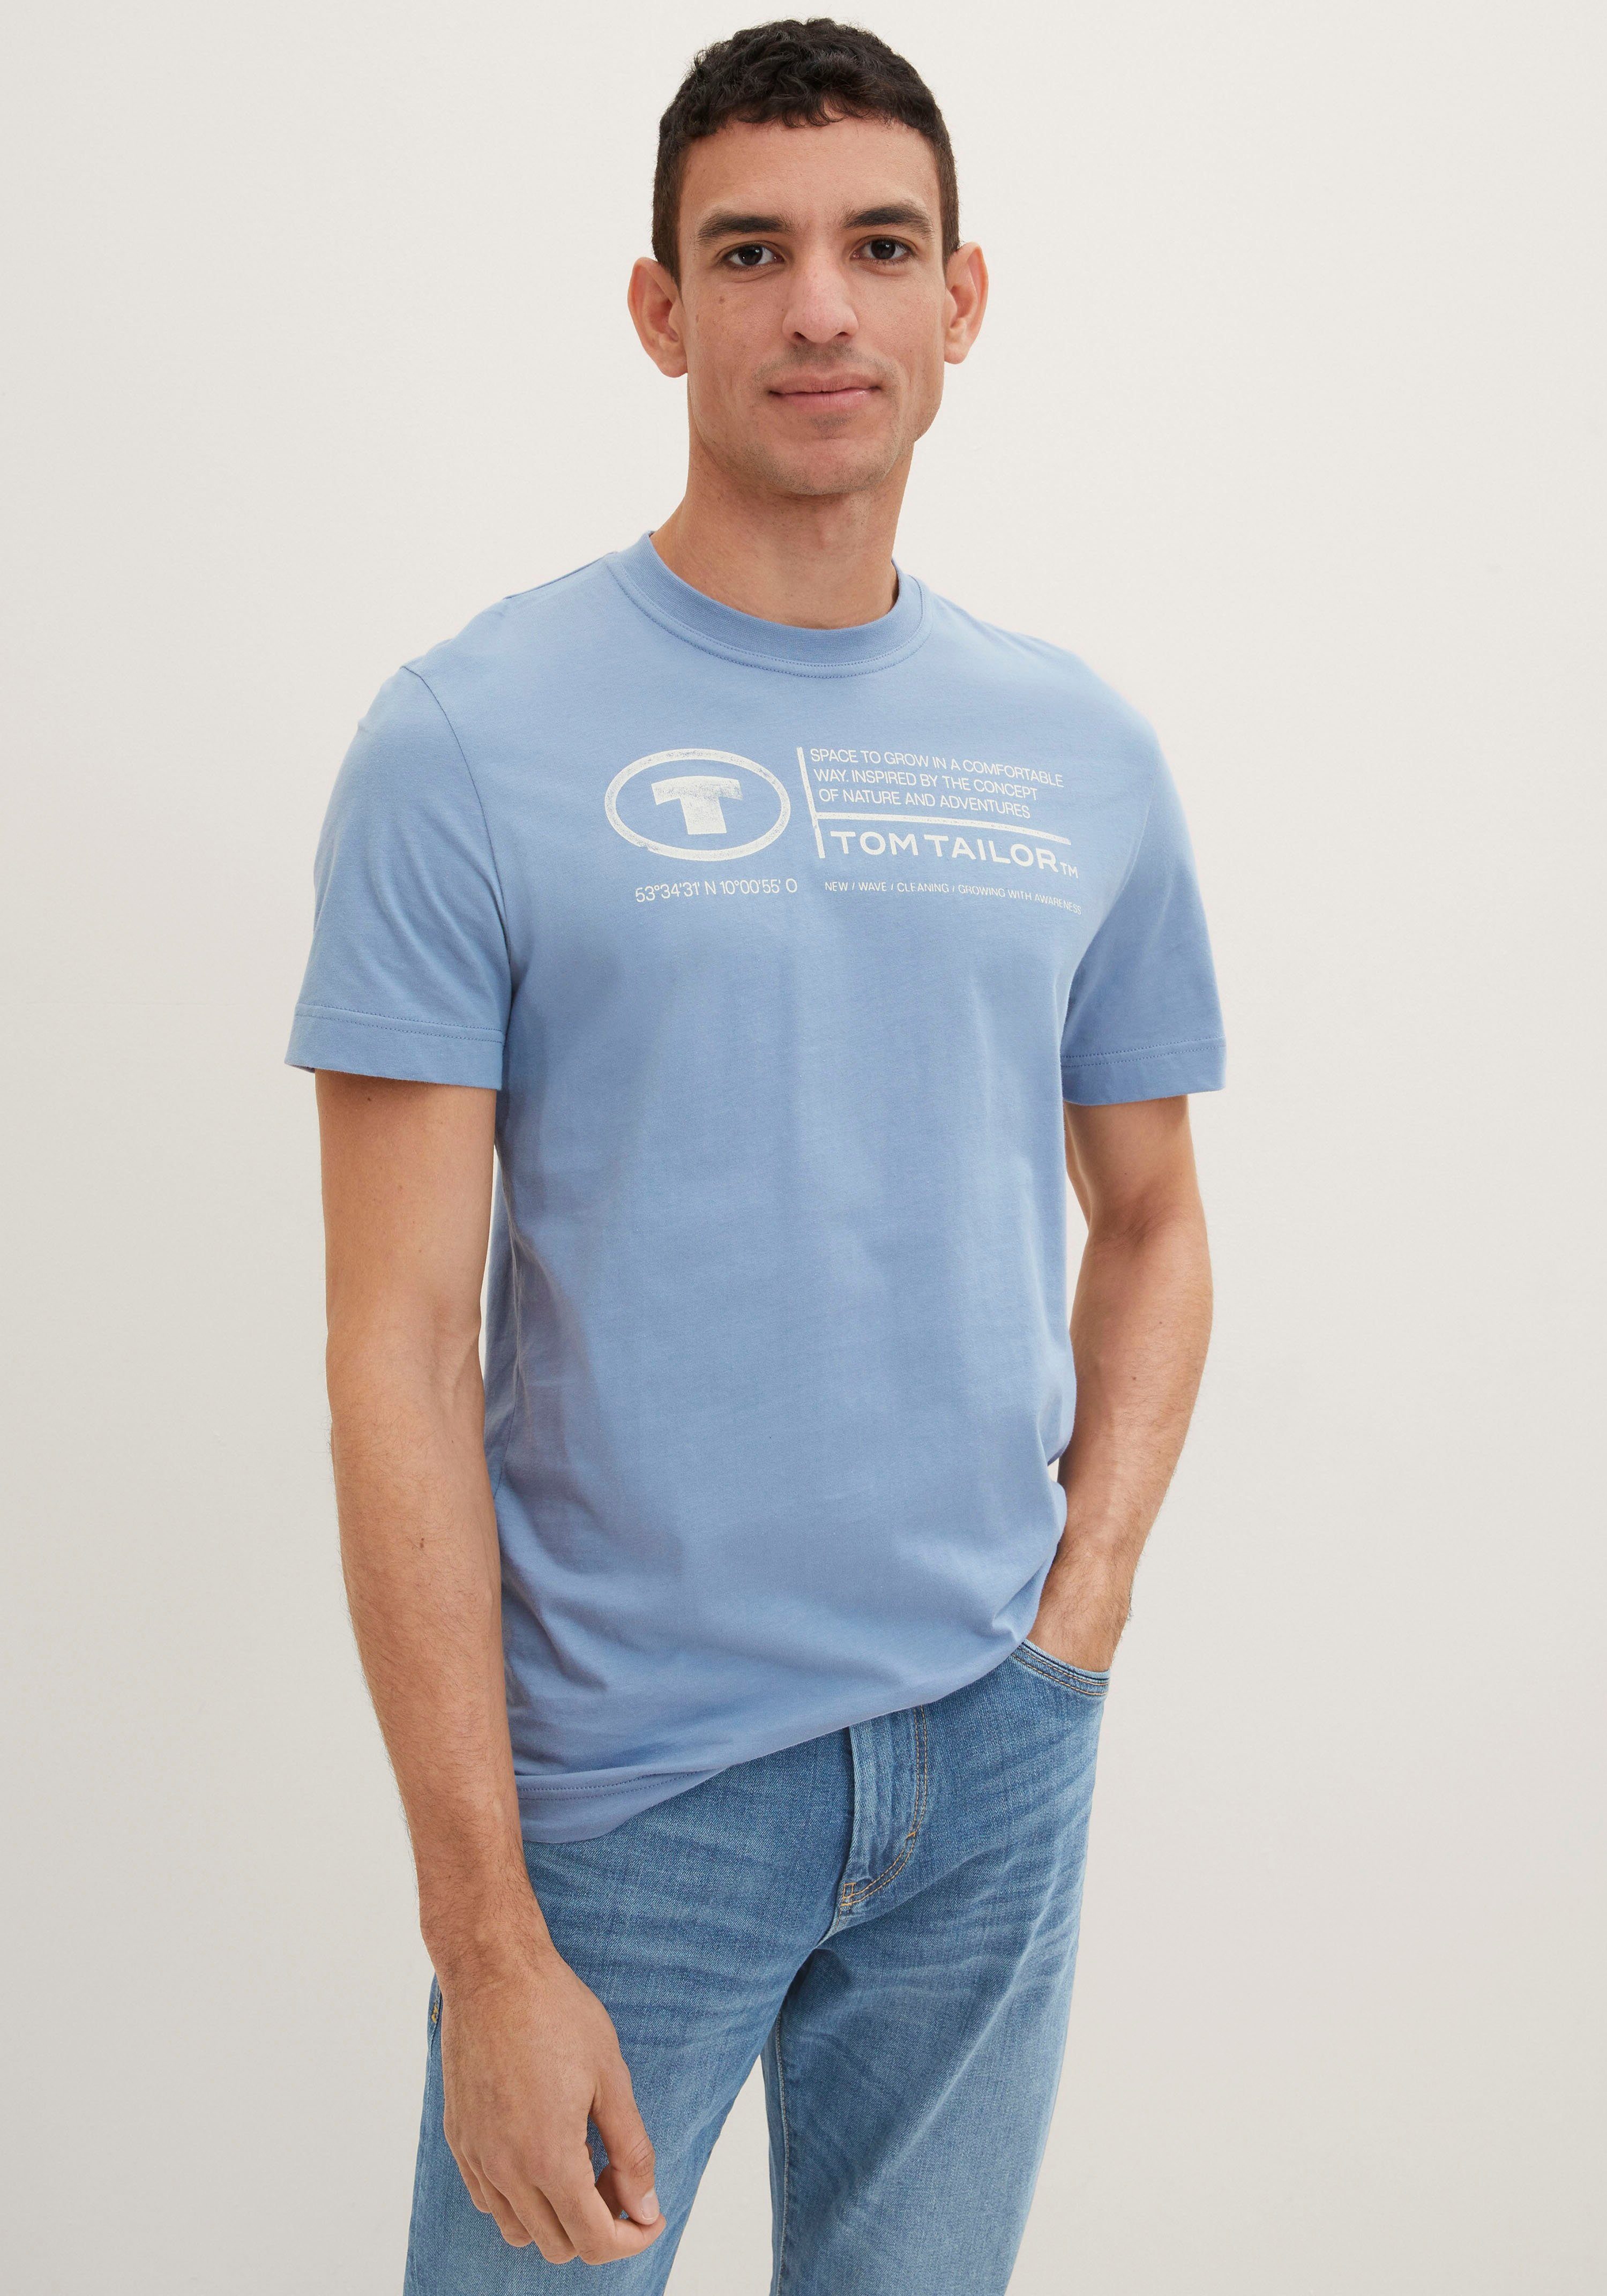 TOM TAILOR Print-Shirt Tailor Tom Greyish Blue T-Shirt Frontprint Mid Herren